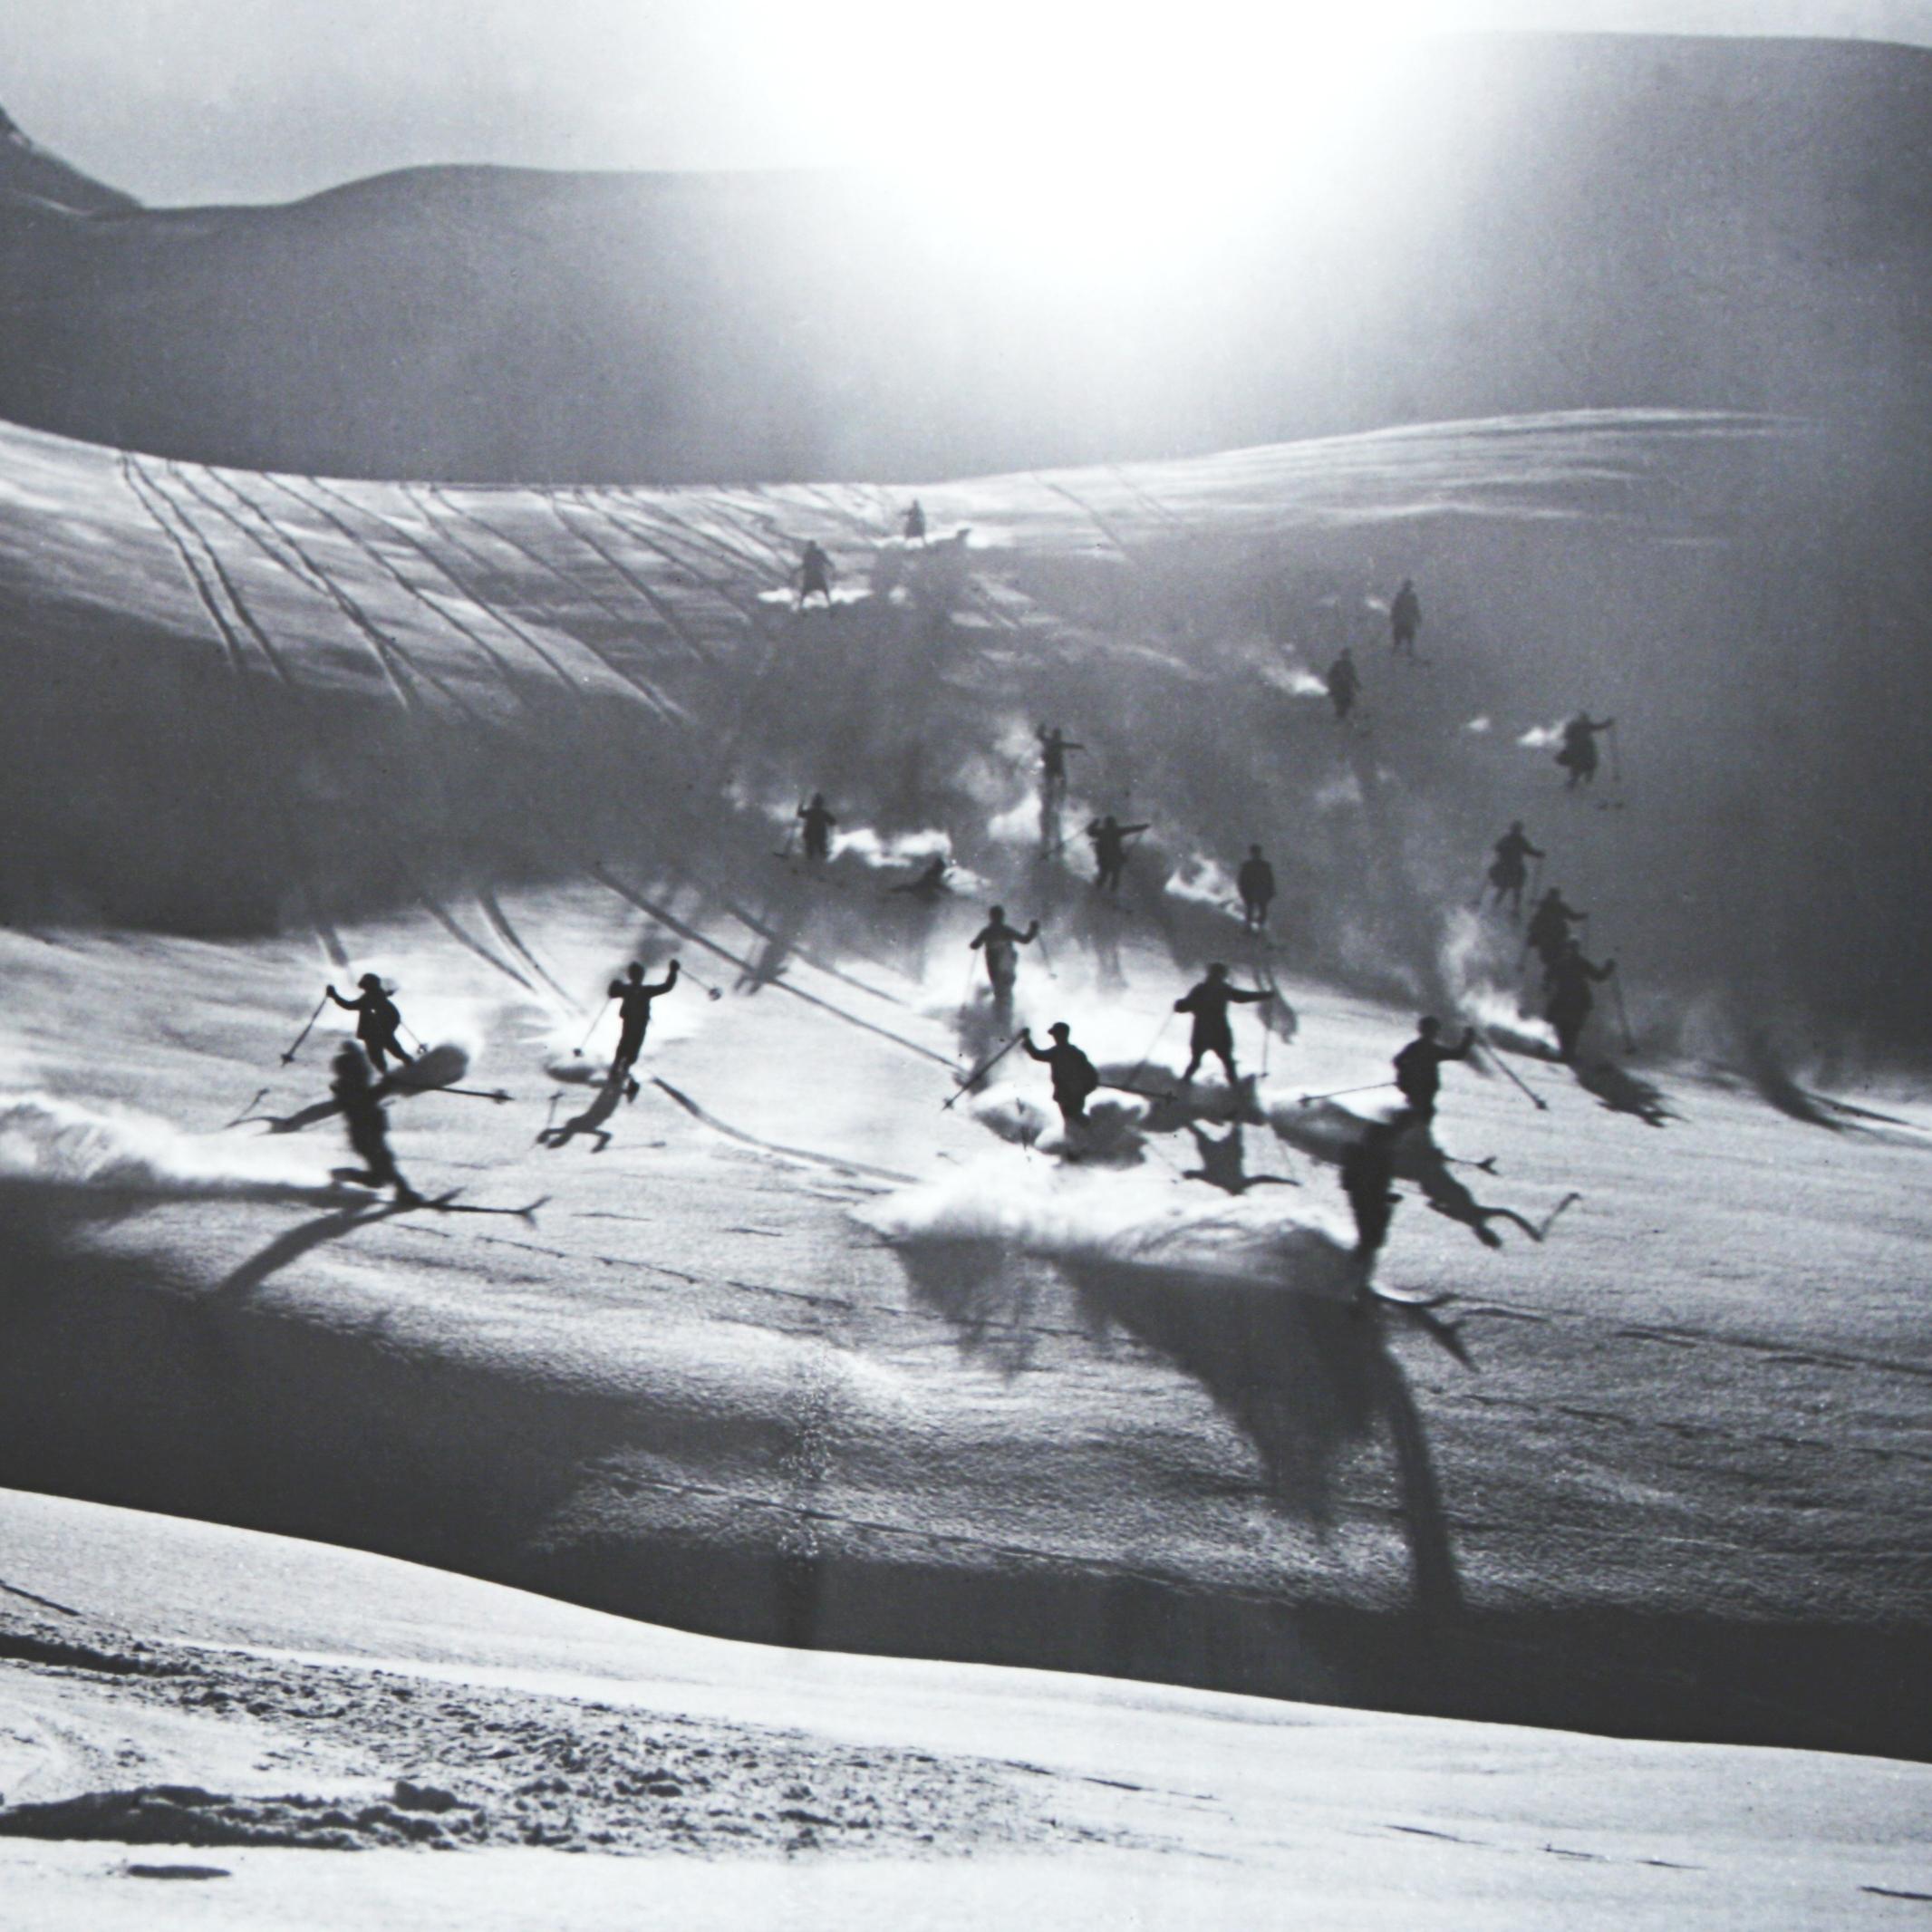 English Alpine Ski Photograph, 'Happy Skiers' Taken from 1930s Original For Sale